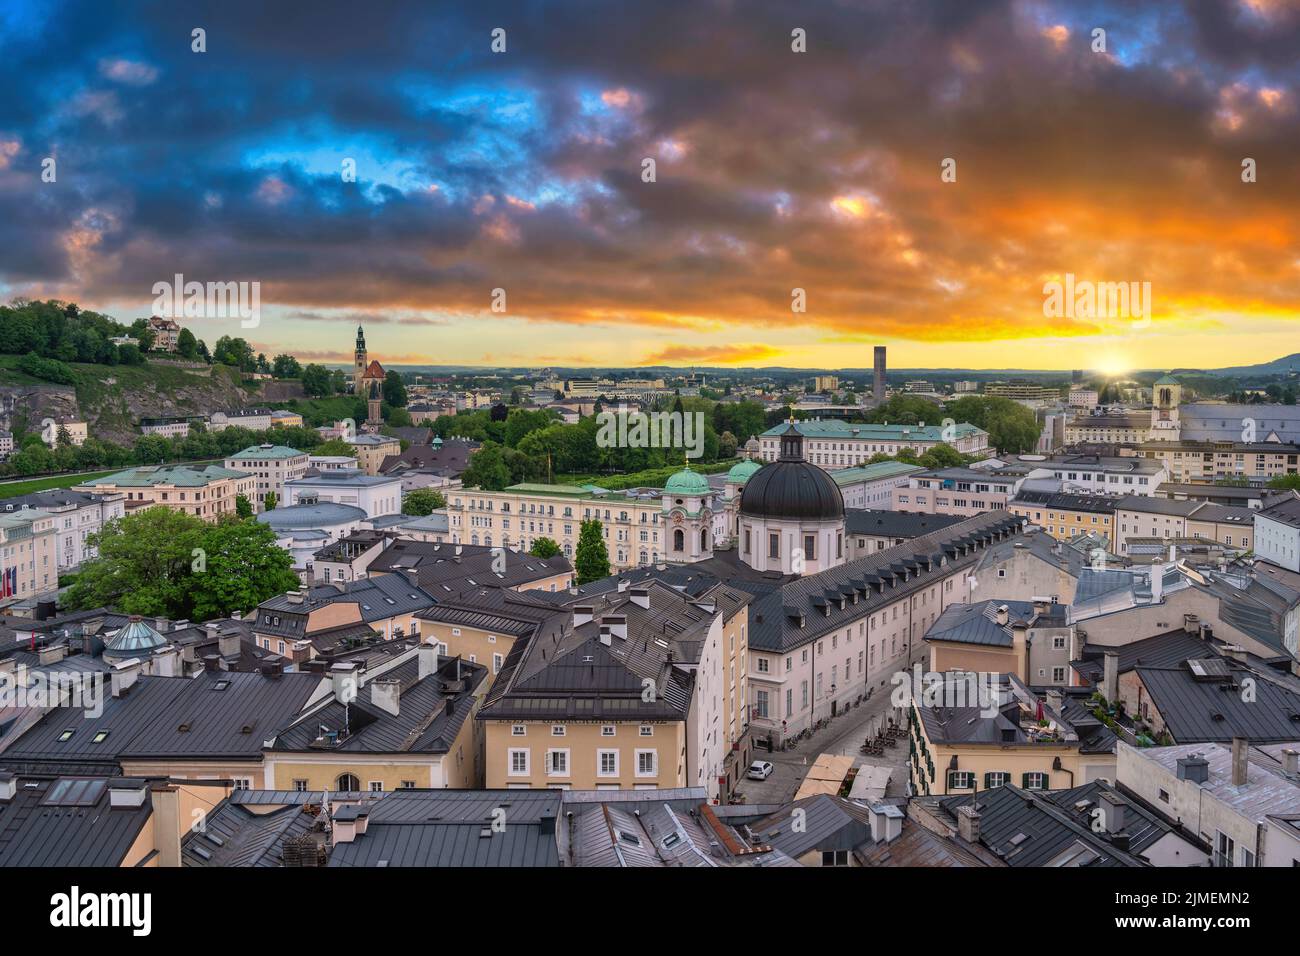 Salzburg Austria, sunset city skyline of Salzburg city center Stock Photo